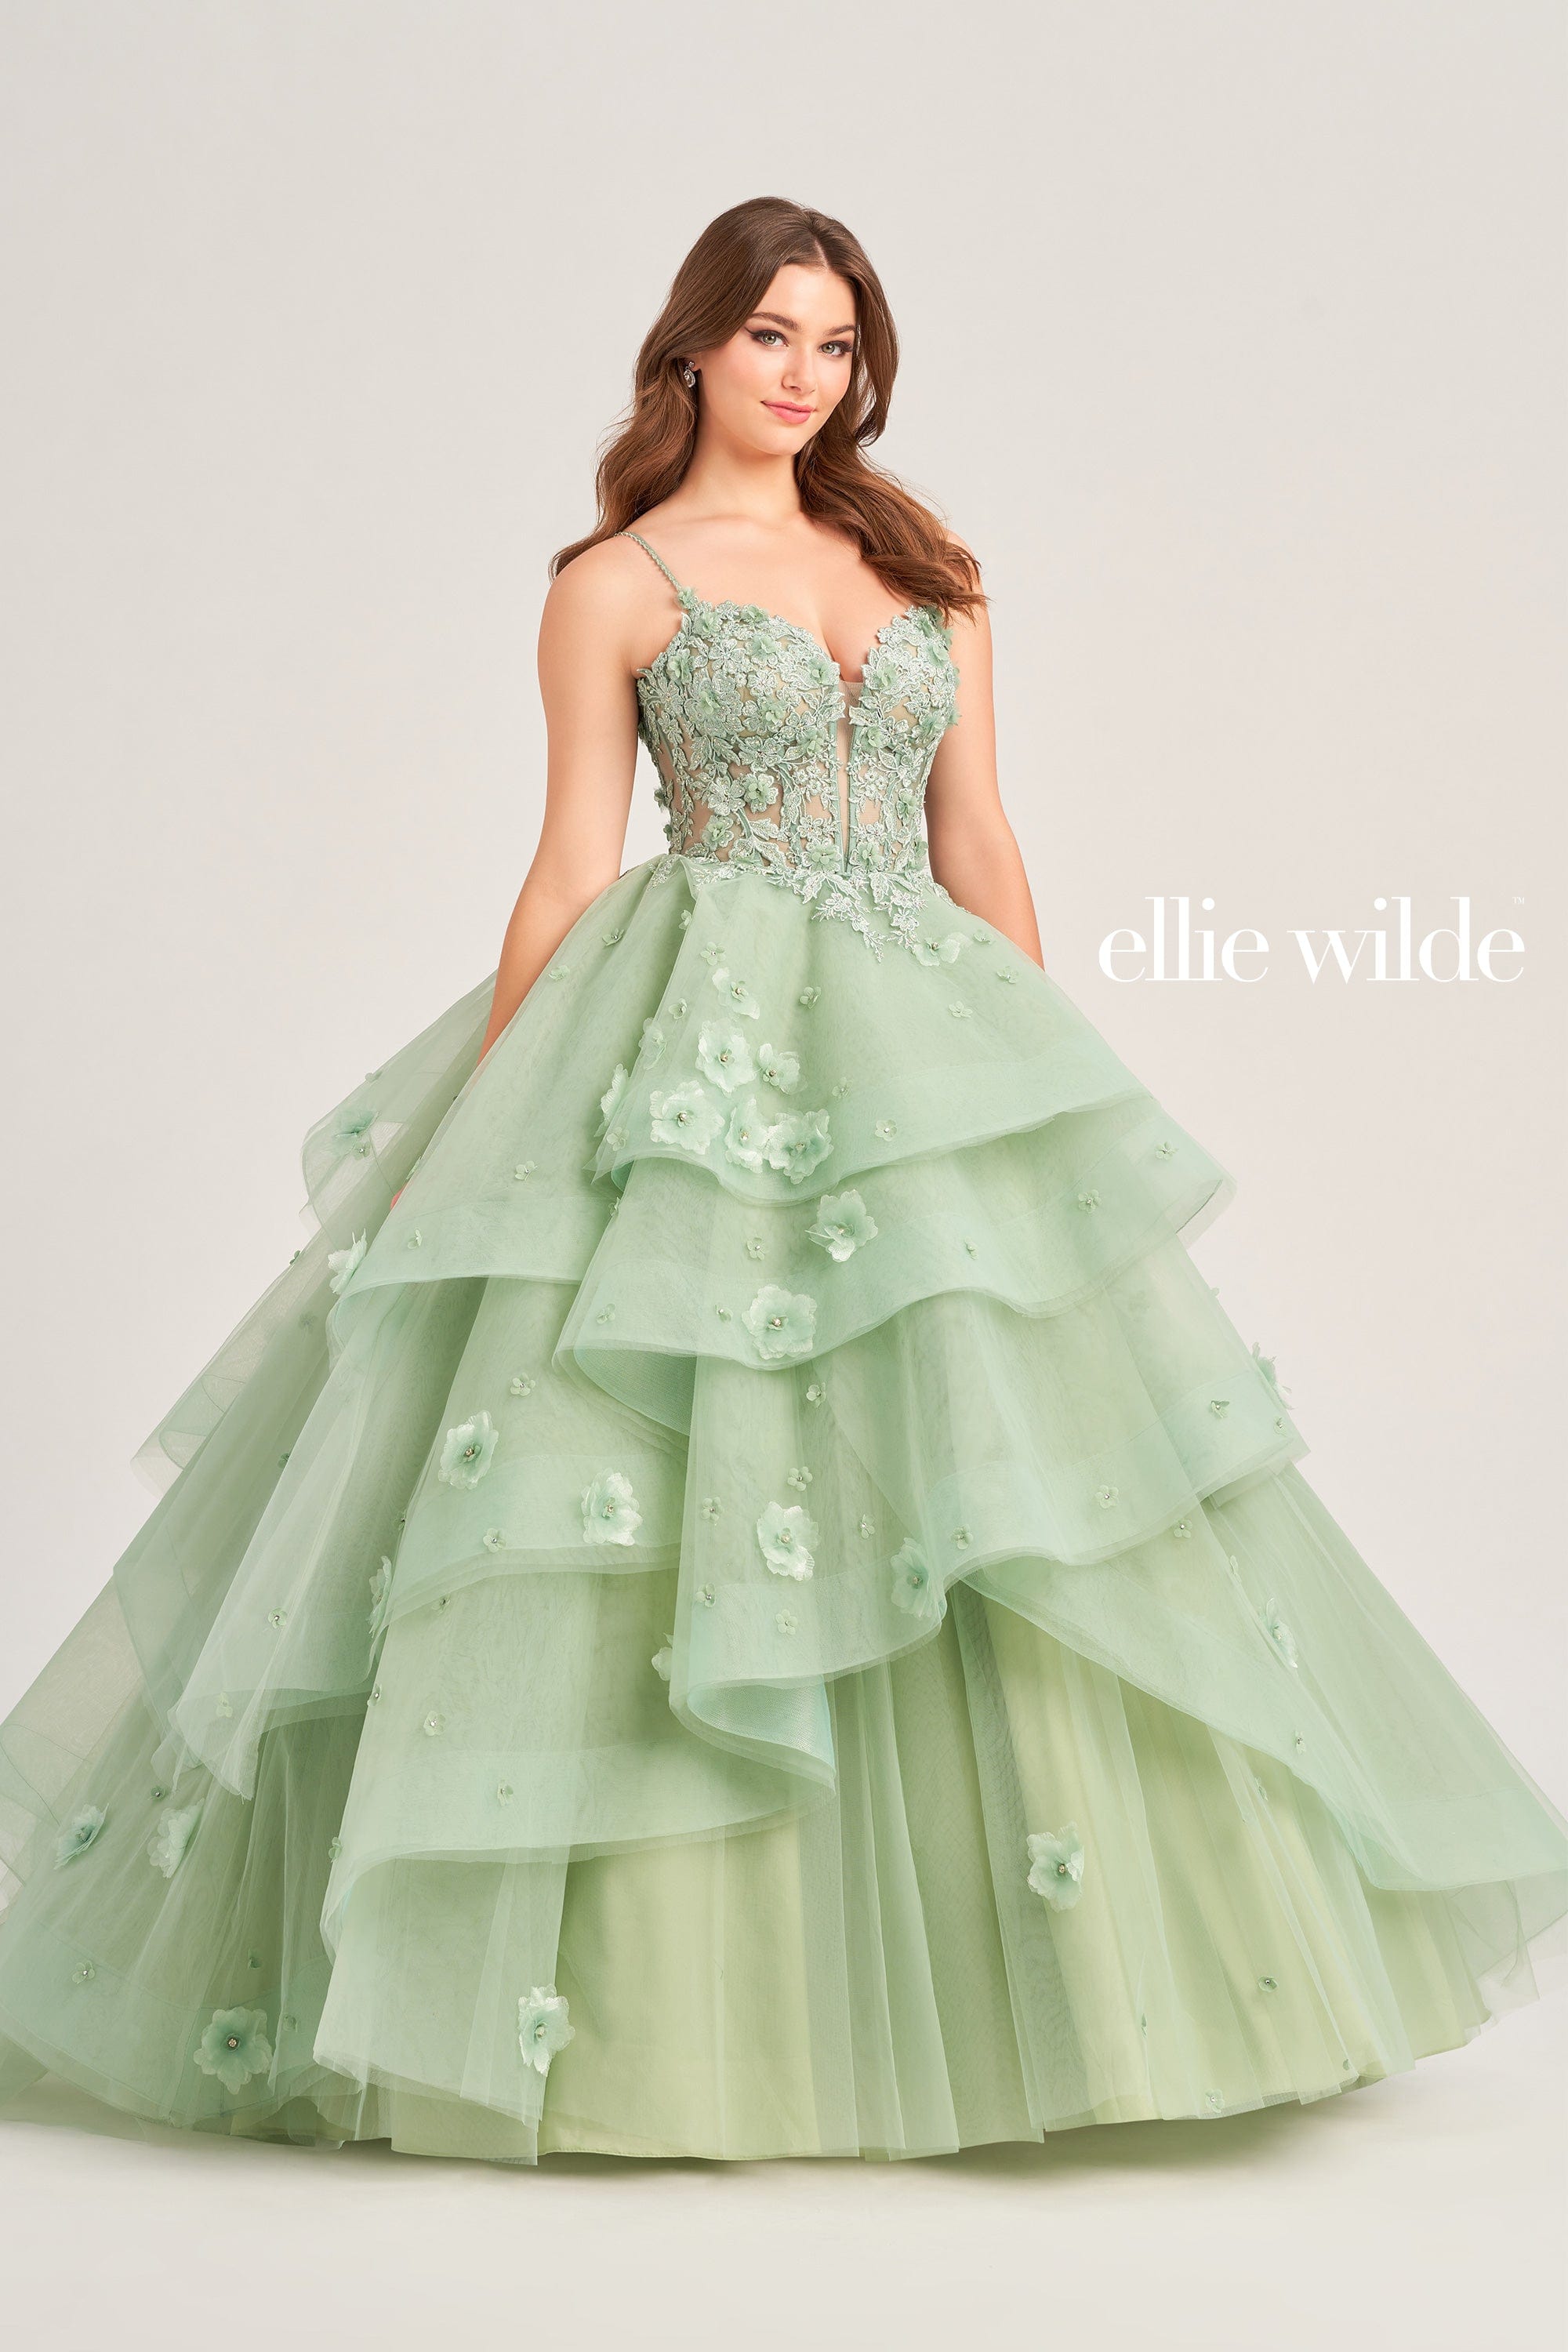 ellie wilde prom dresses